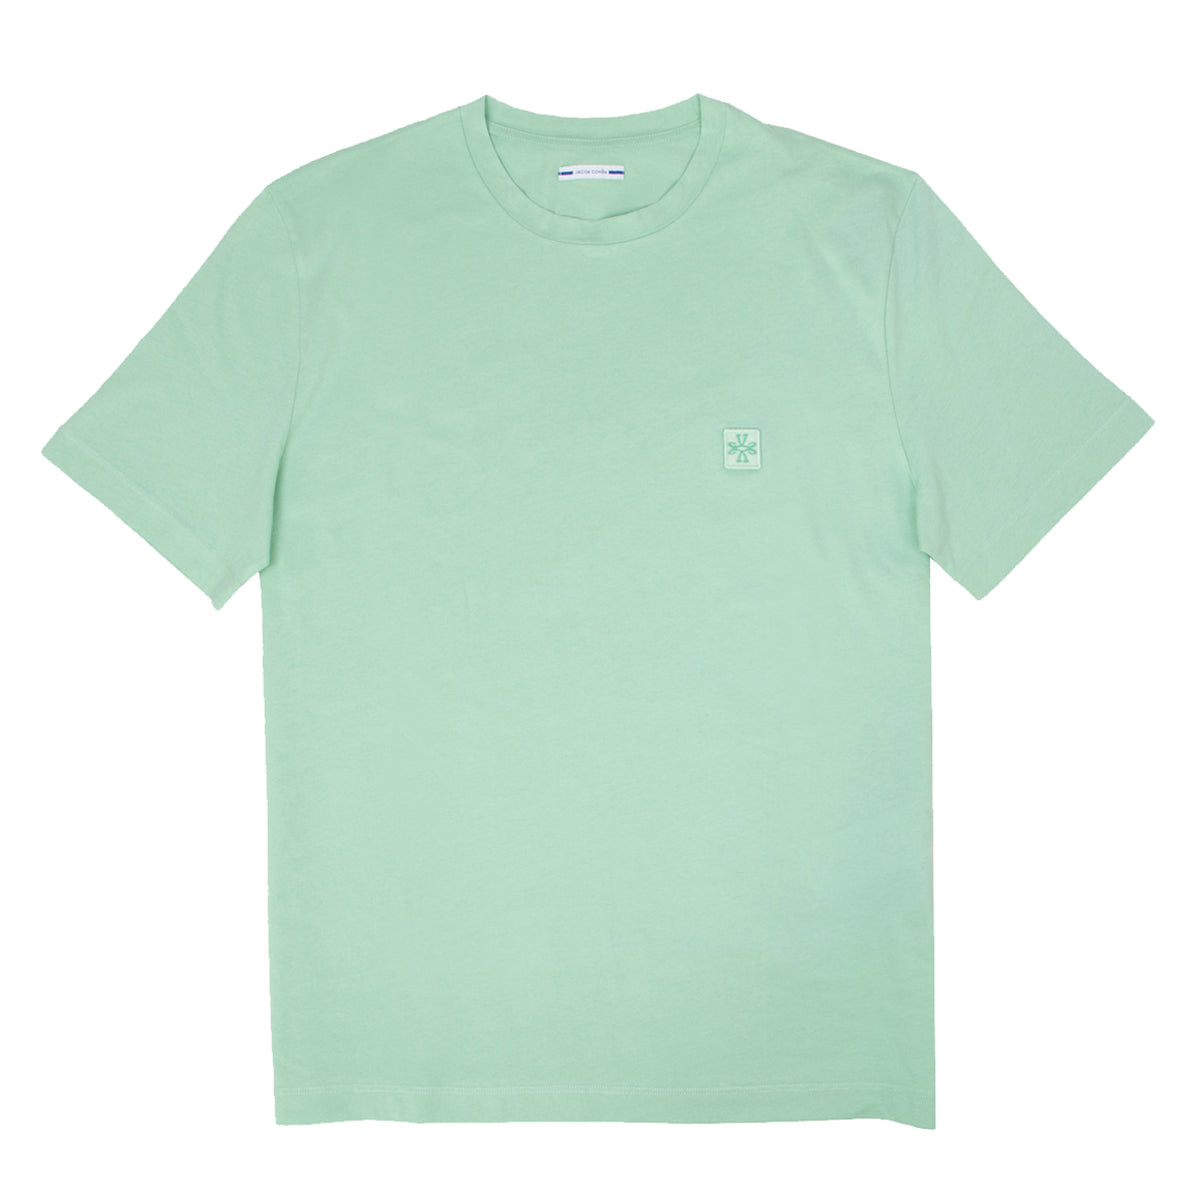 Mint Green 100% Cotton T-Shirt  Jacob Cohën   